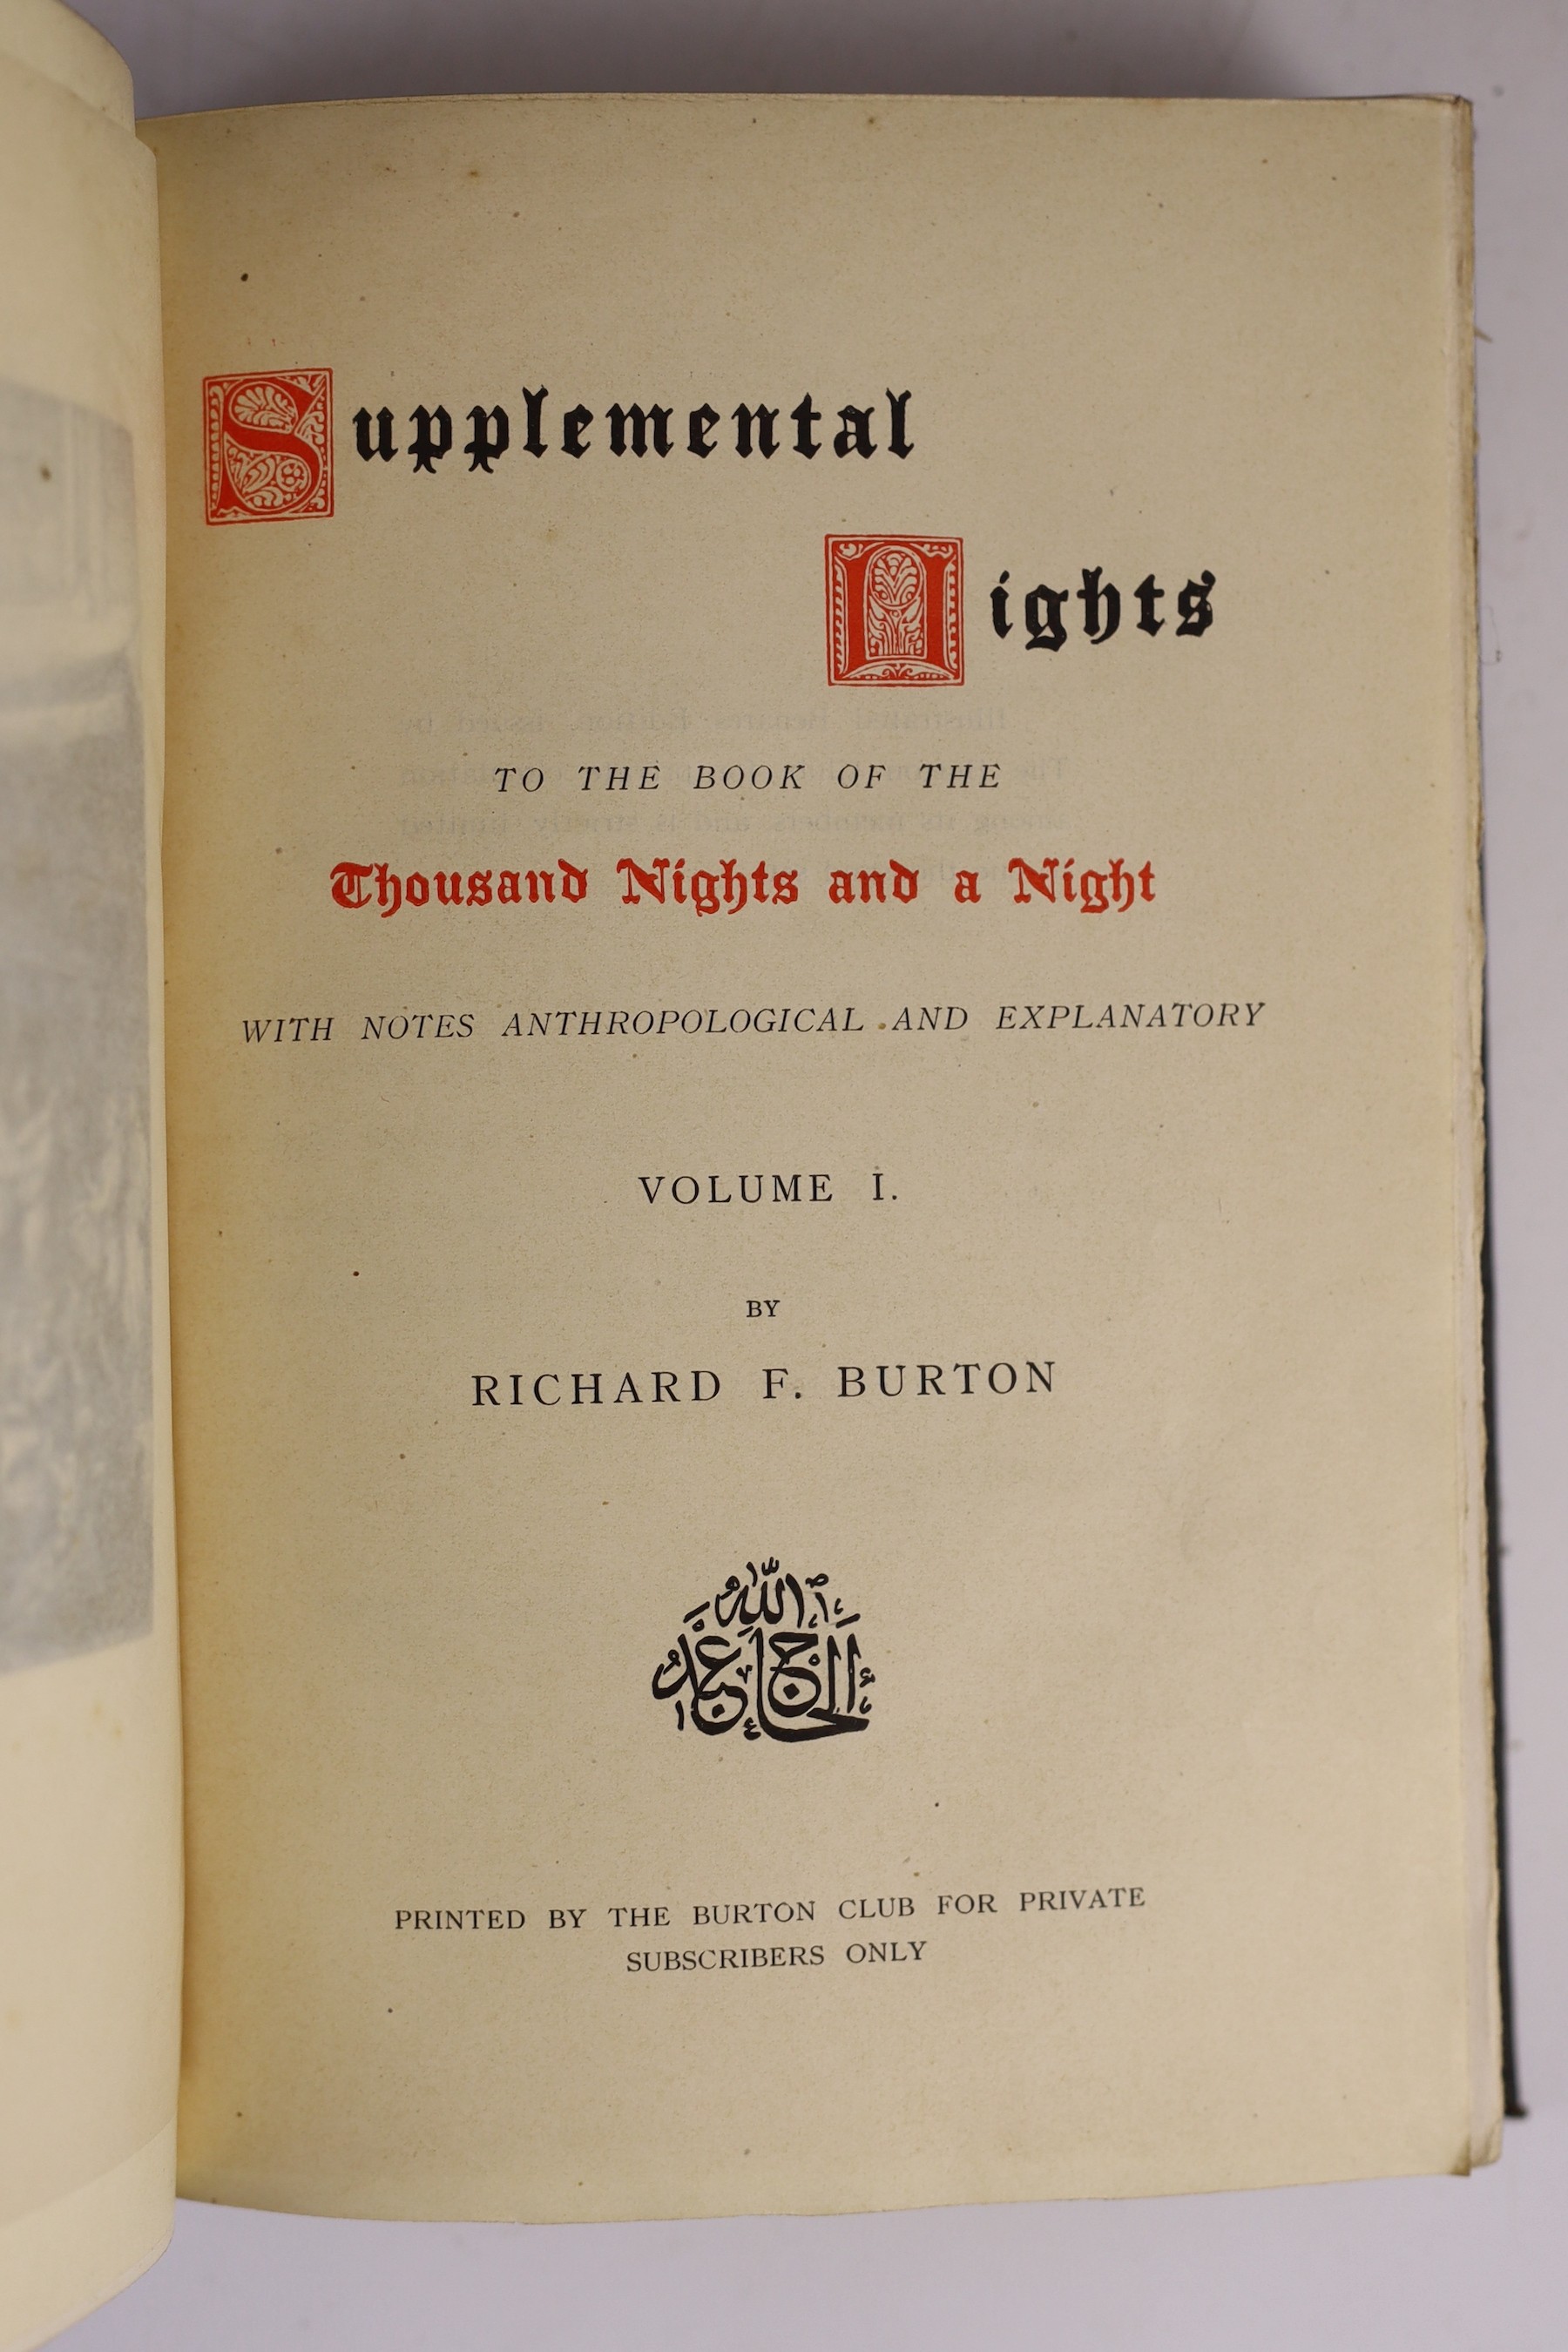 Burton, Richard (translator) - The Book of a Thousand Nights and a Night, Benares edition, 10 vols and 7 Supplemental Nights, 8vo, cloth, The Burton Club, [1903-1920] (17)